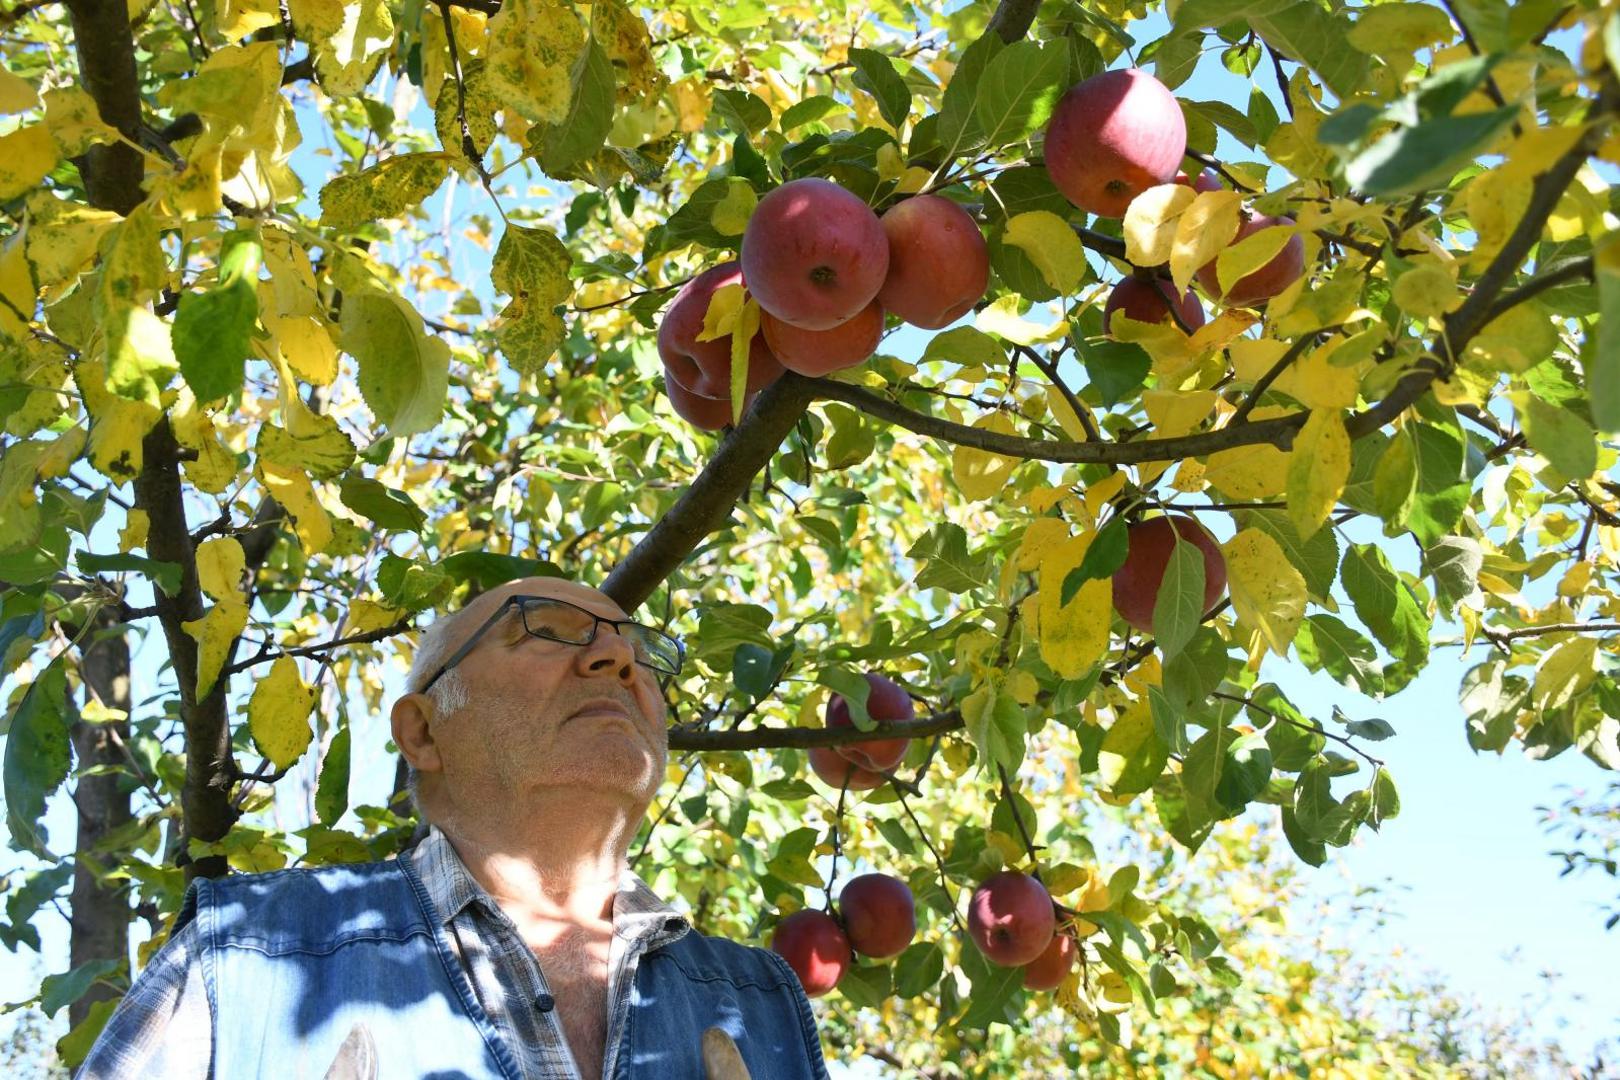 28.10.2020., Cvetkovec - Pavle Kovacic uzgaja i skuplja starinske domace sorte jabuka kojih u svom vocnjaku ima preko 800 vrsta. 
Photo:Damir Spehar/PIXSELL